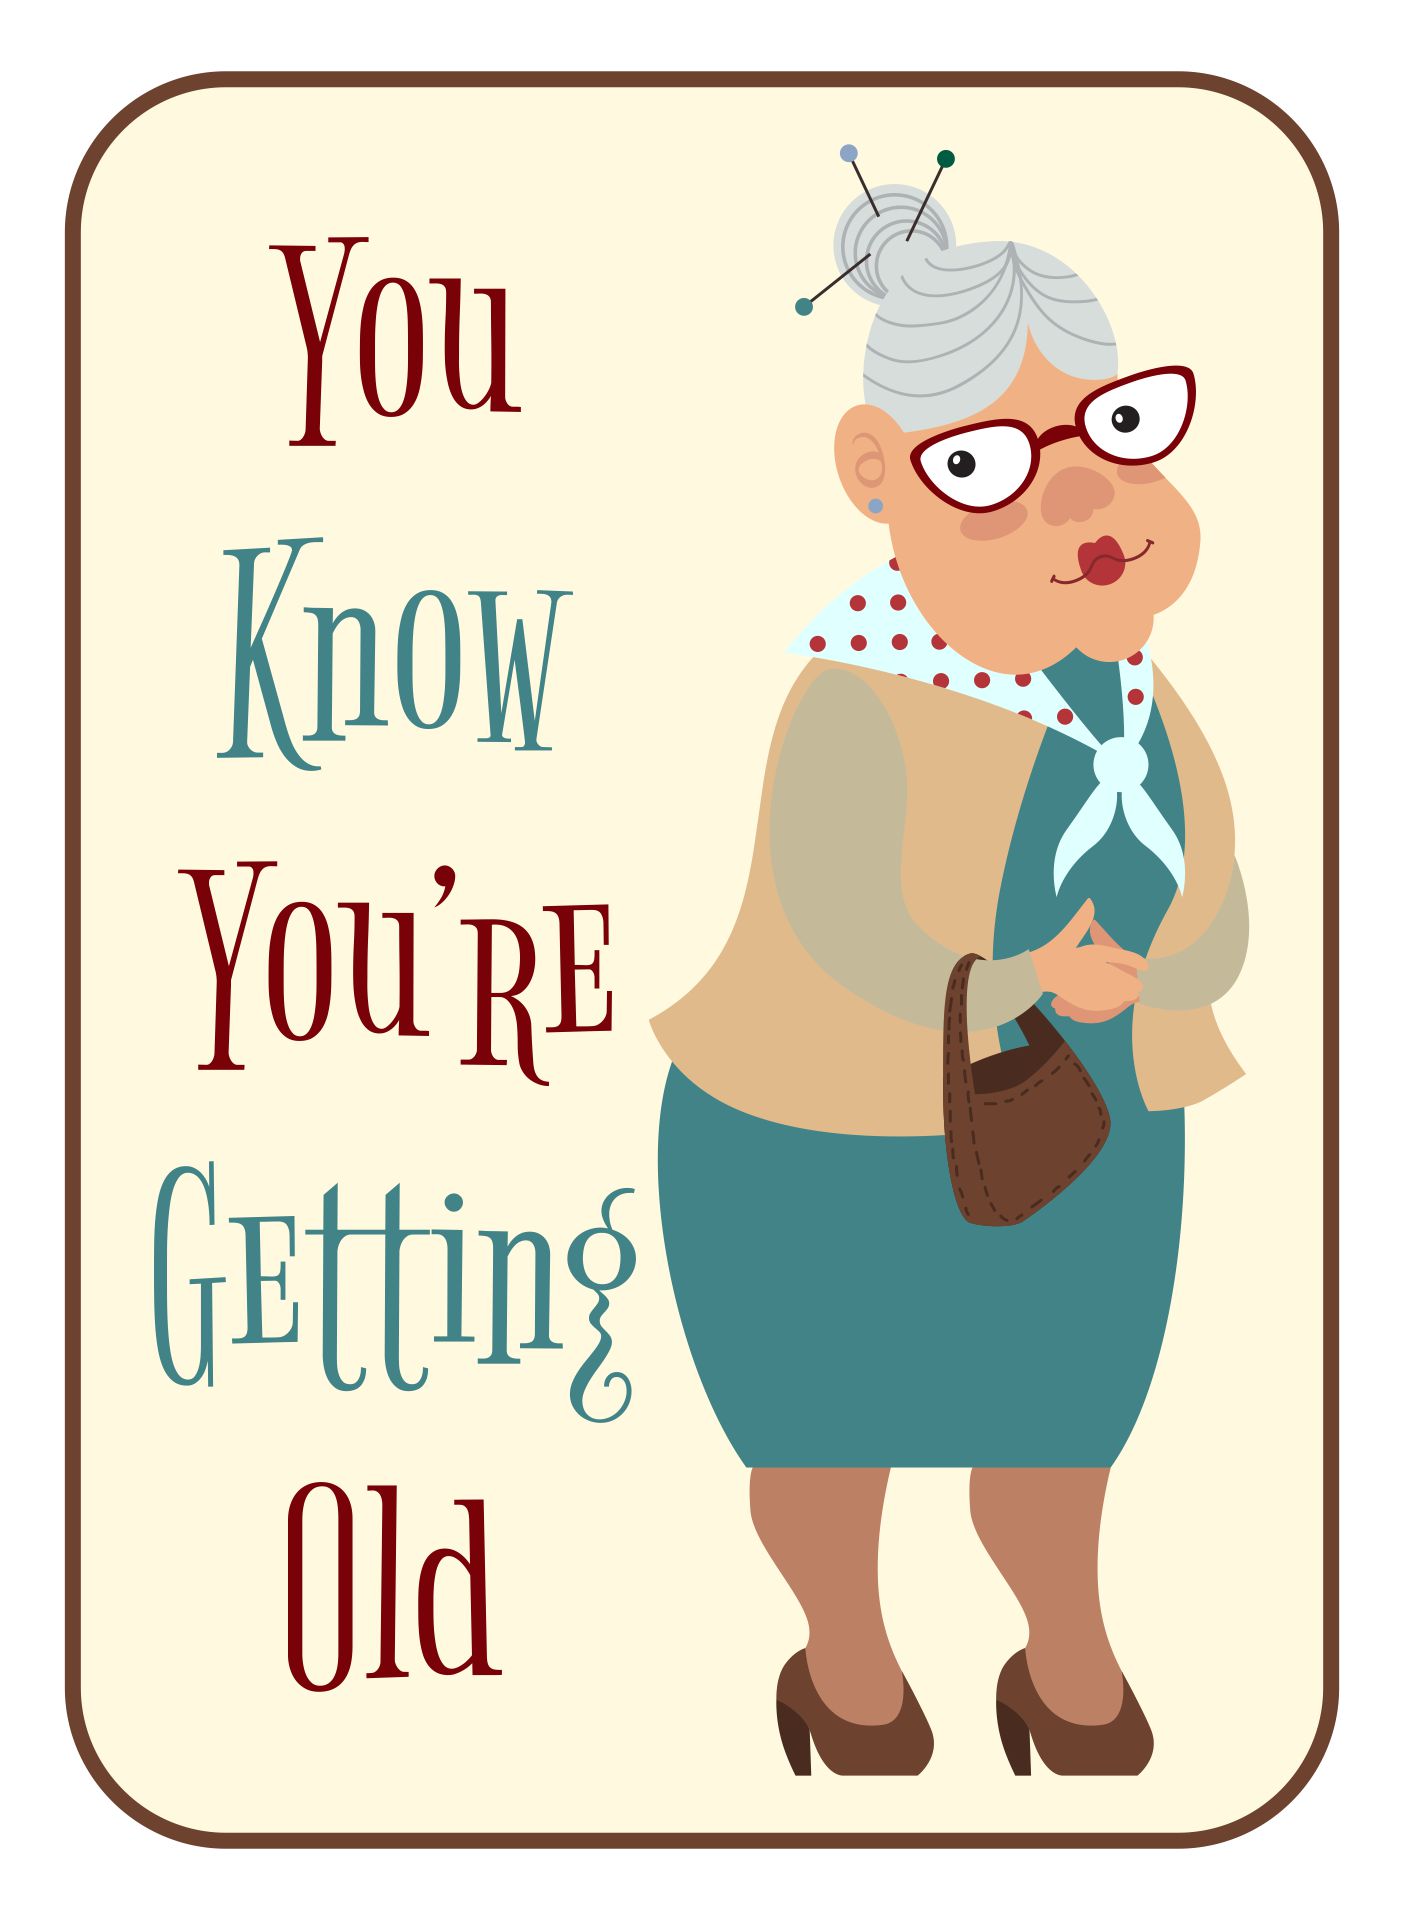 Happy Birthday Old Lady, Old Aunt Lorraine always makes me blush ...